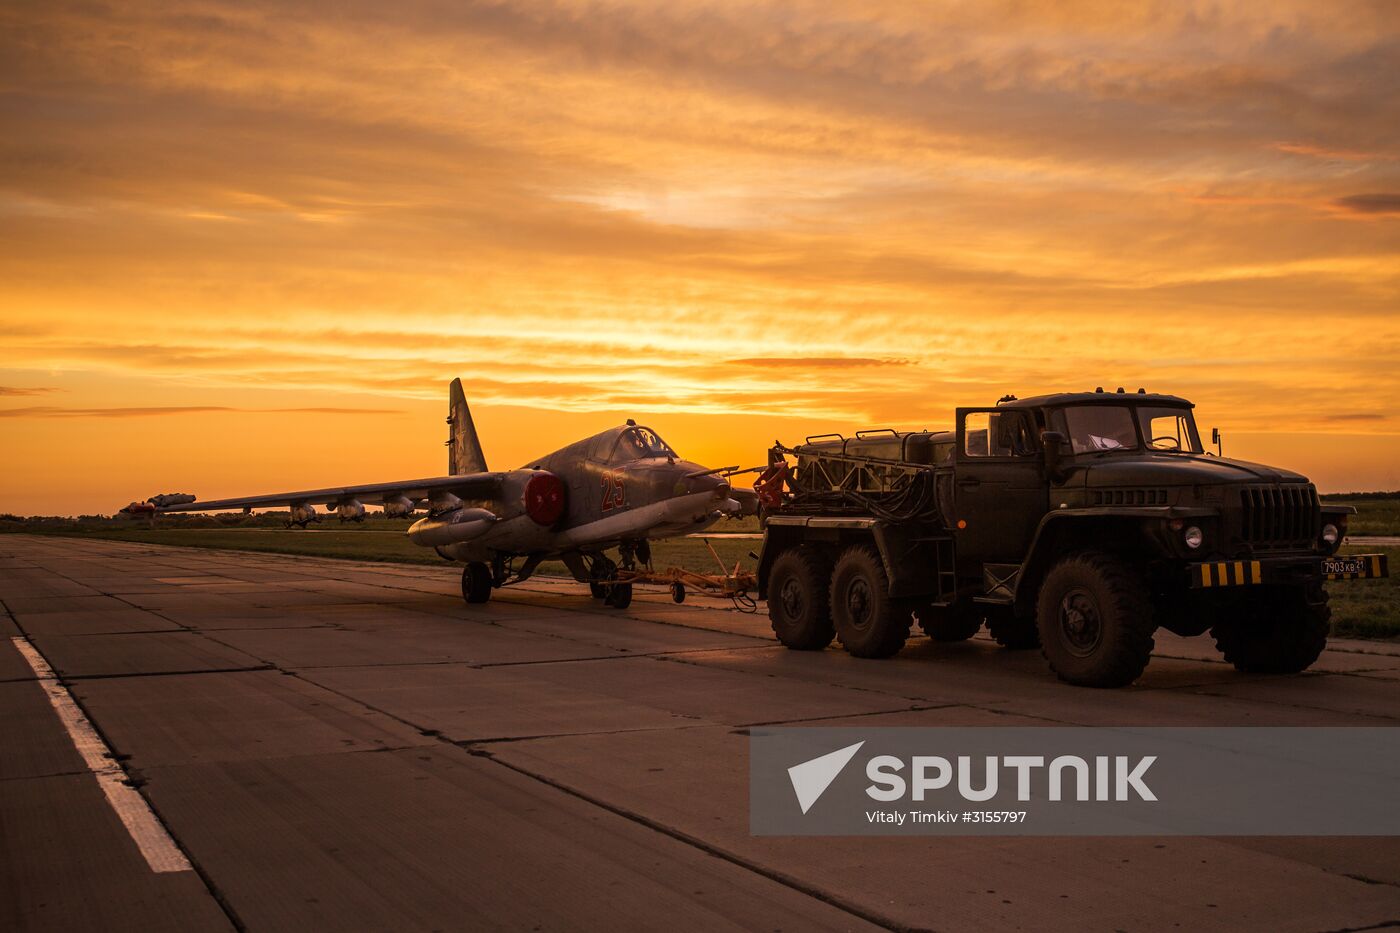 Flight training of Sukhoi SU-25 crews in Primorsko-Akhtarsk